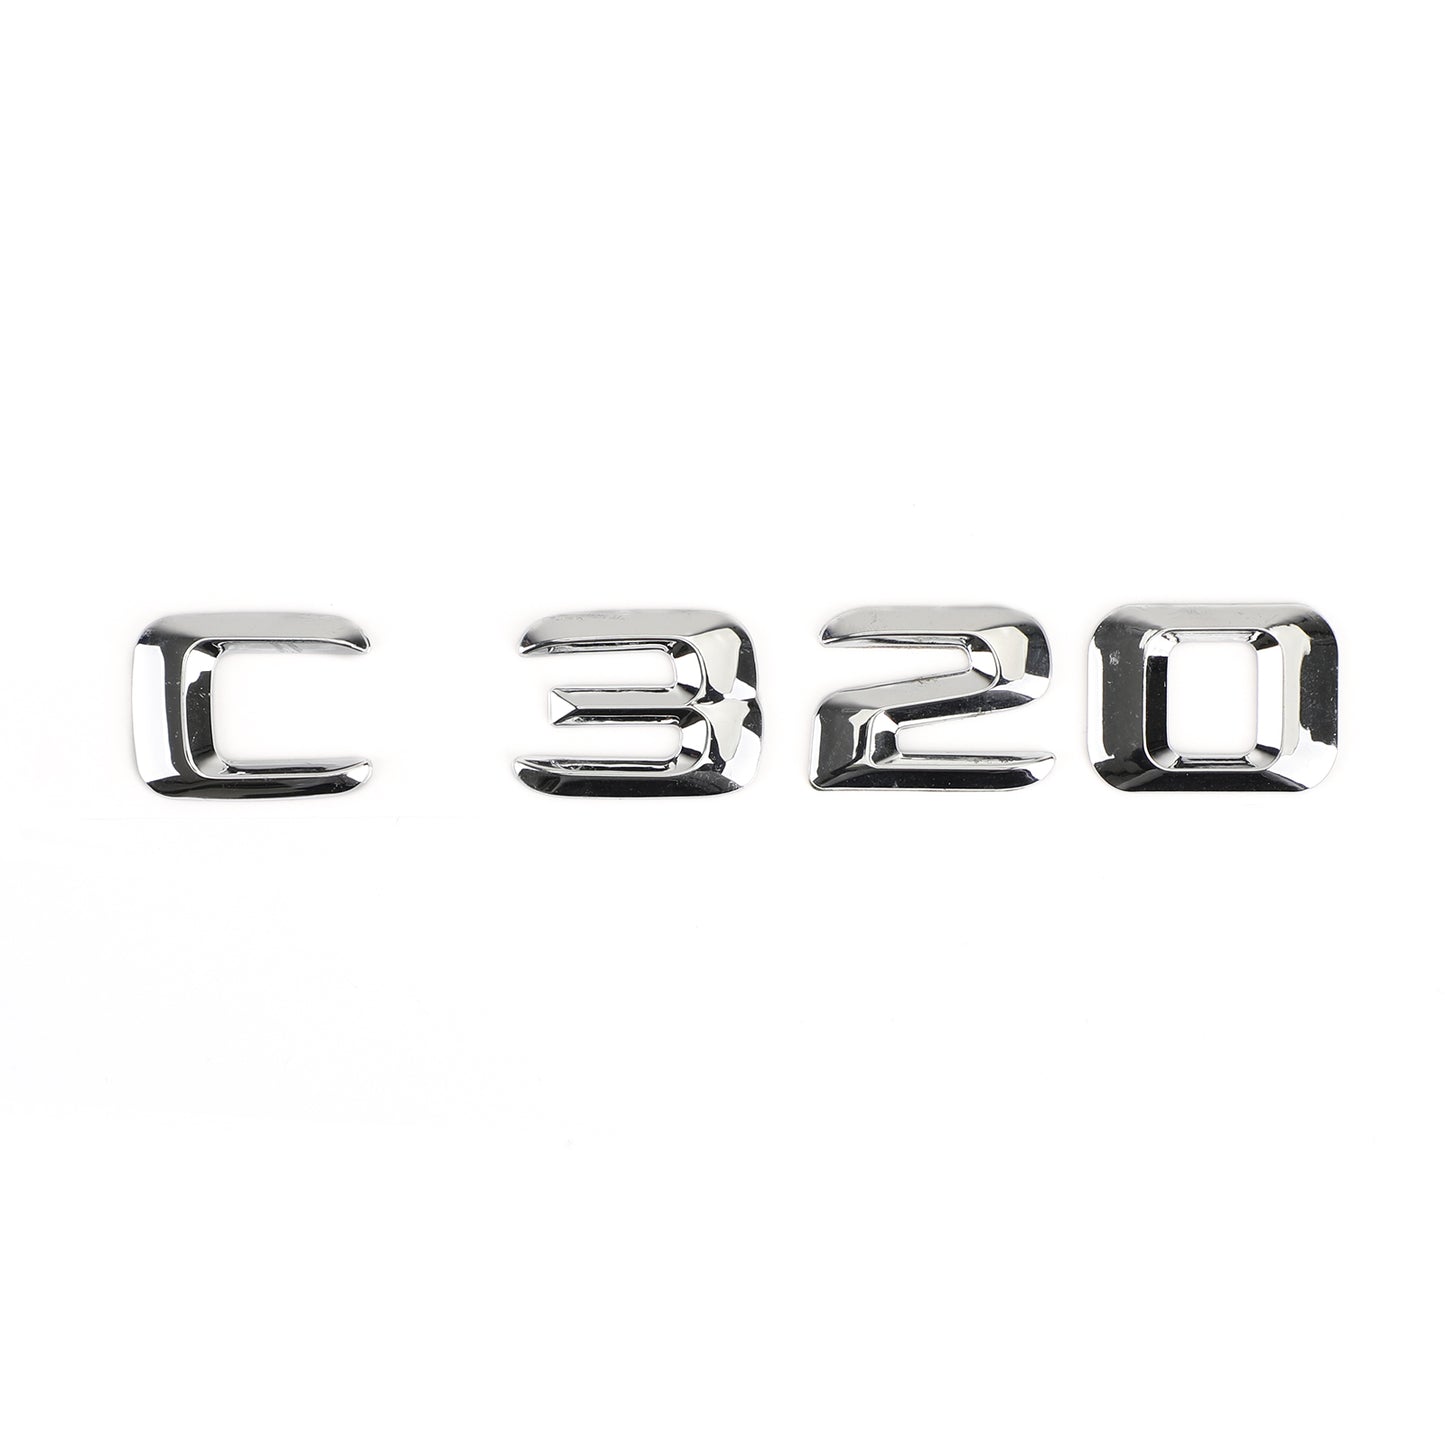 Rear Trunk Nameplate Emblem Abzeichen Aufkleber Decal Für Mercedes C320 Chrome